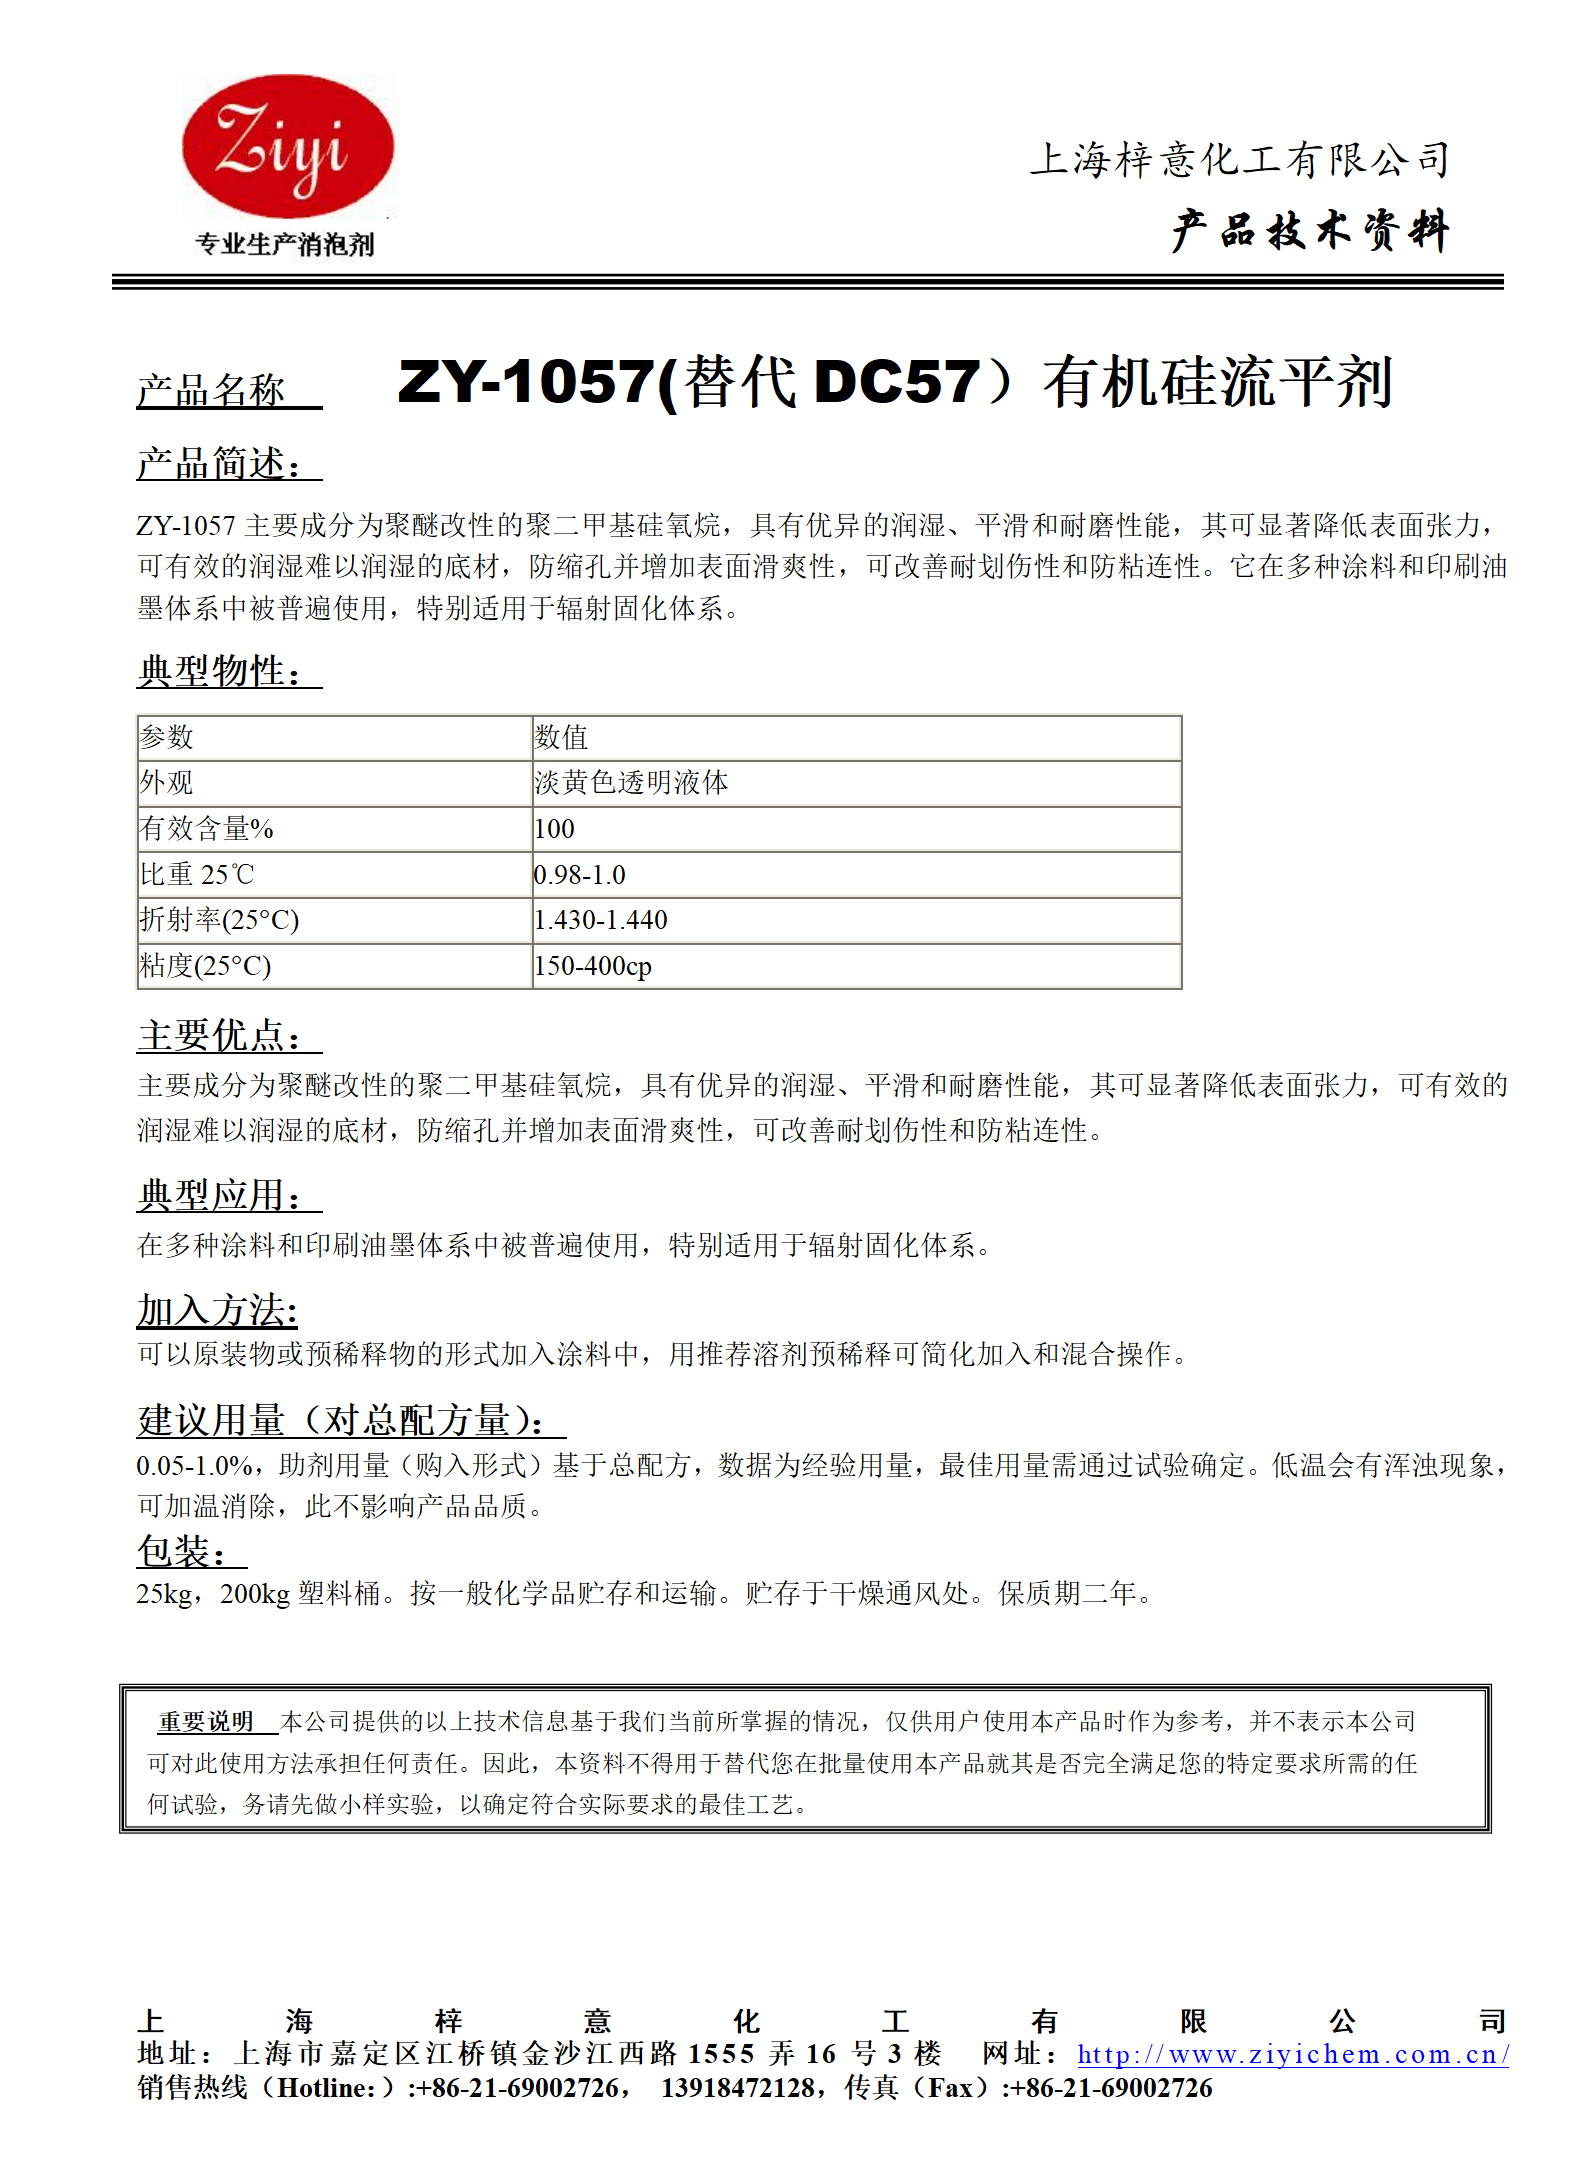 ZY-1057 (替代DC57）有機硅流平劑_01.png